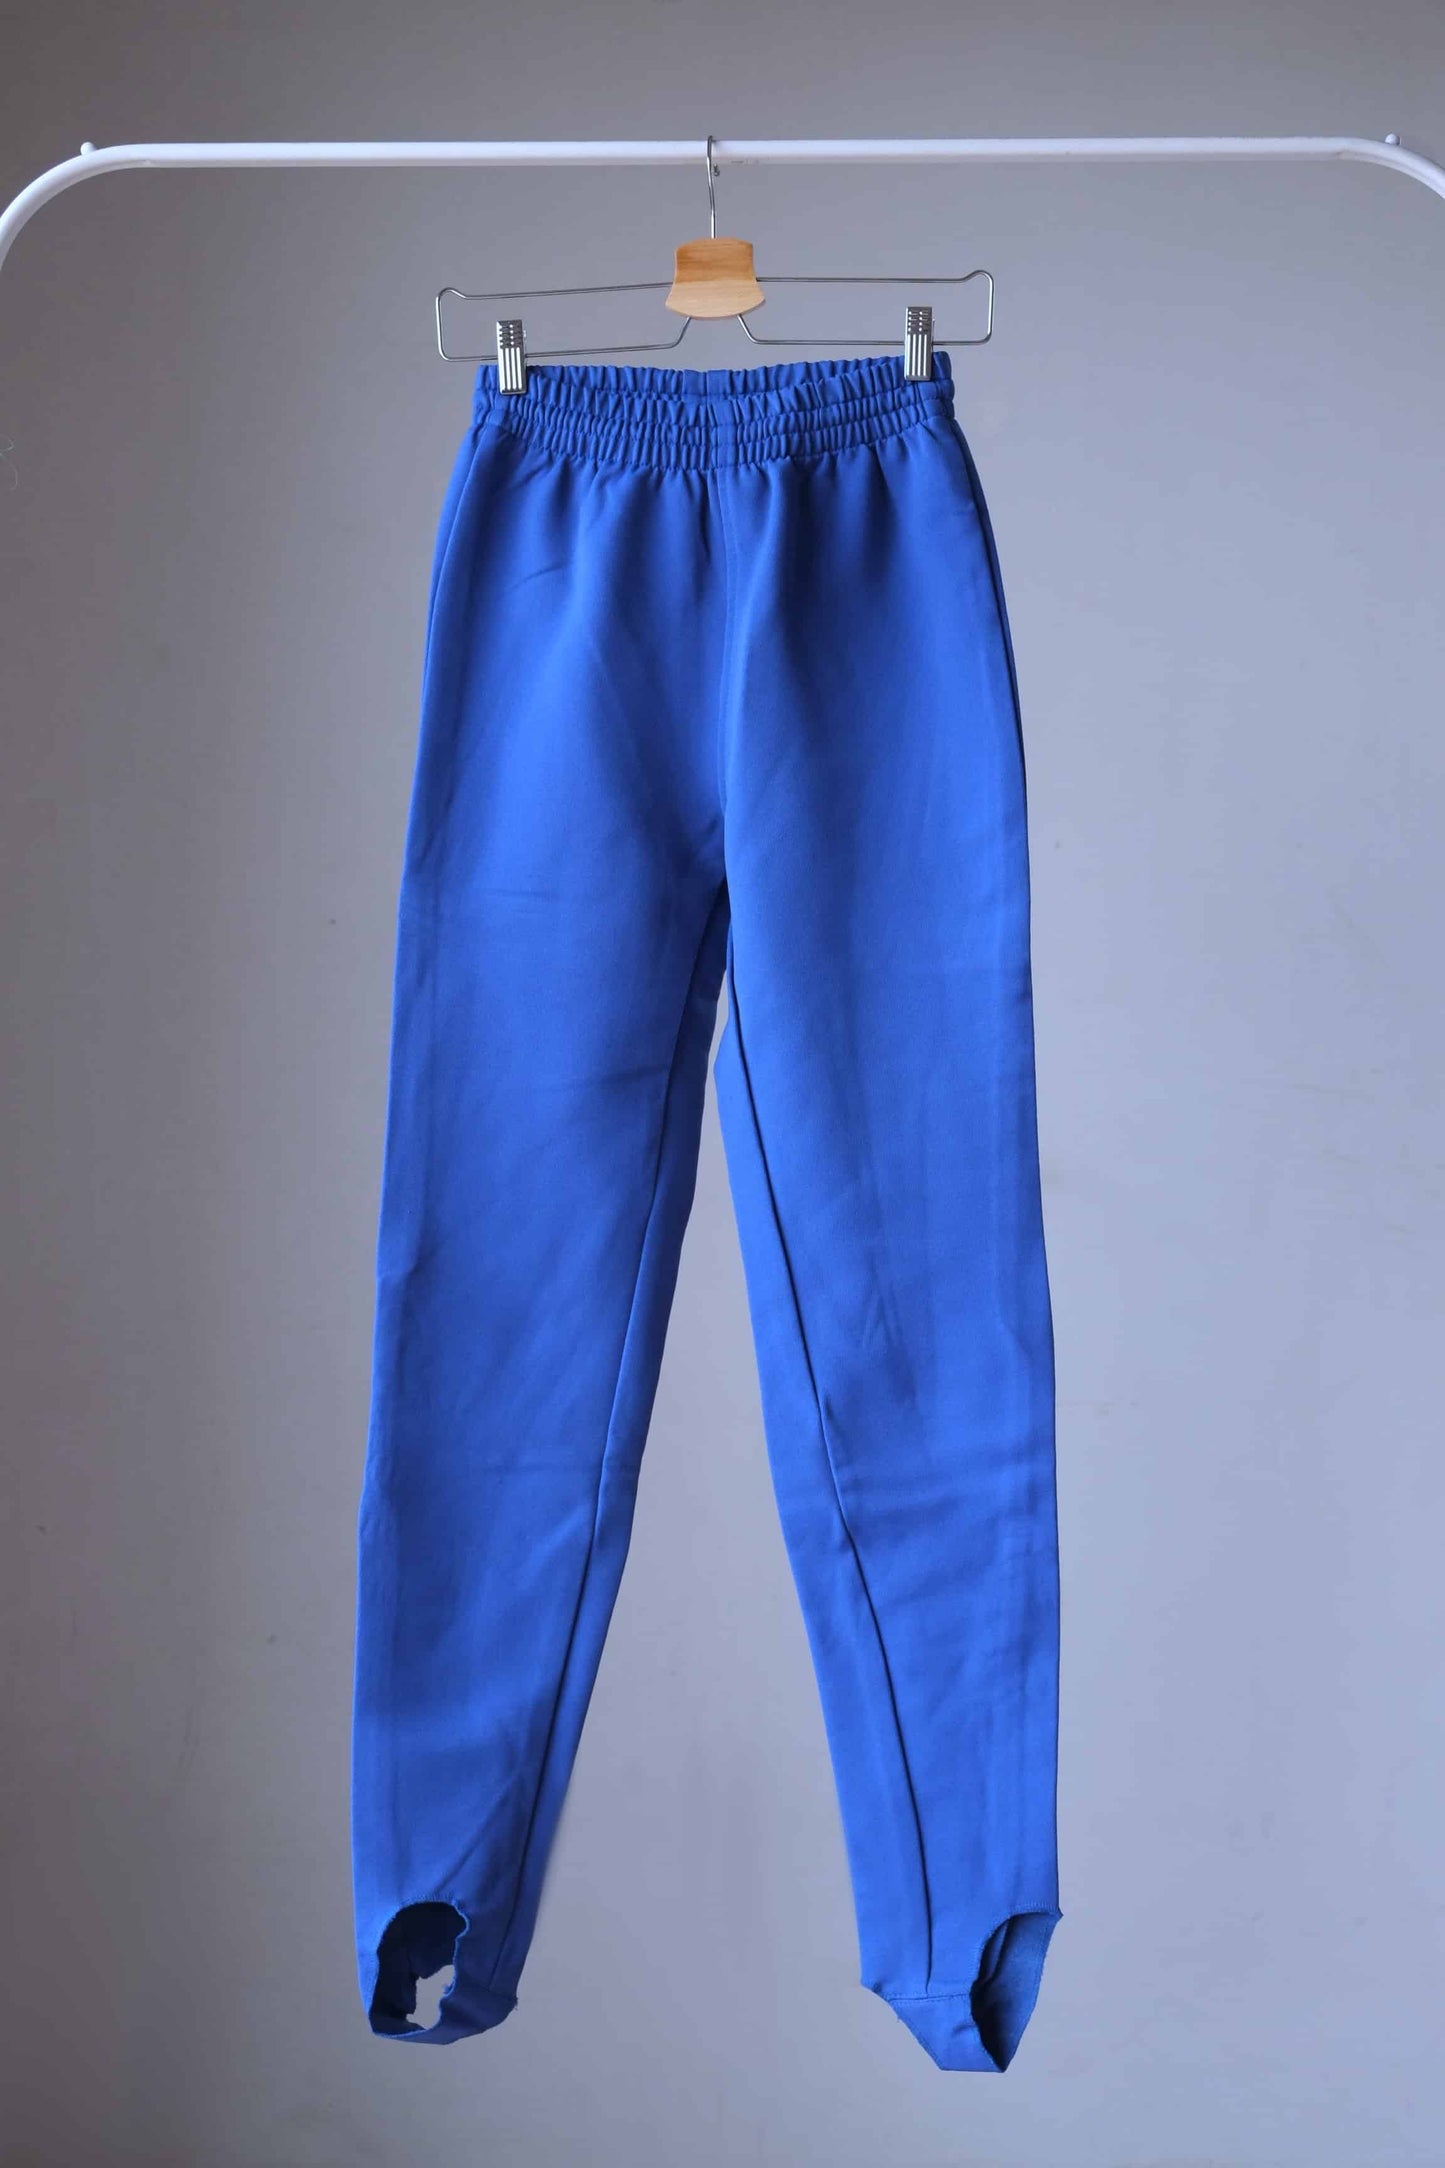 ellesse 90s sitrrup ladies ski pants blueELLESSE 90's Ski Pants with Stirrups blue